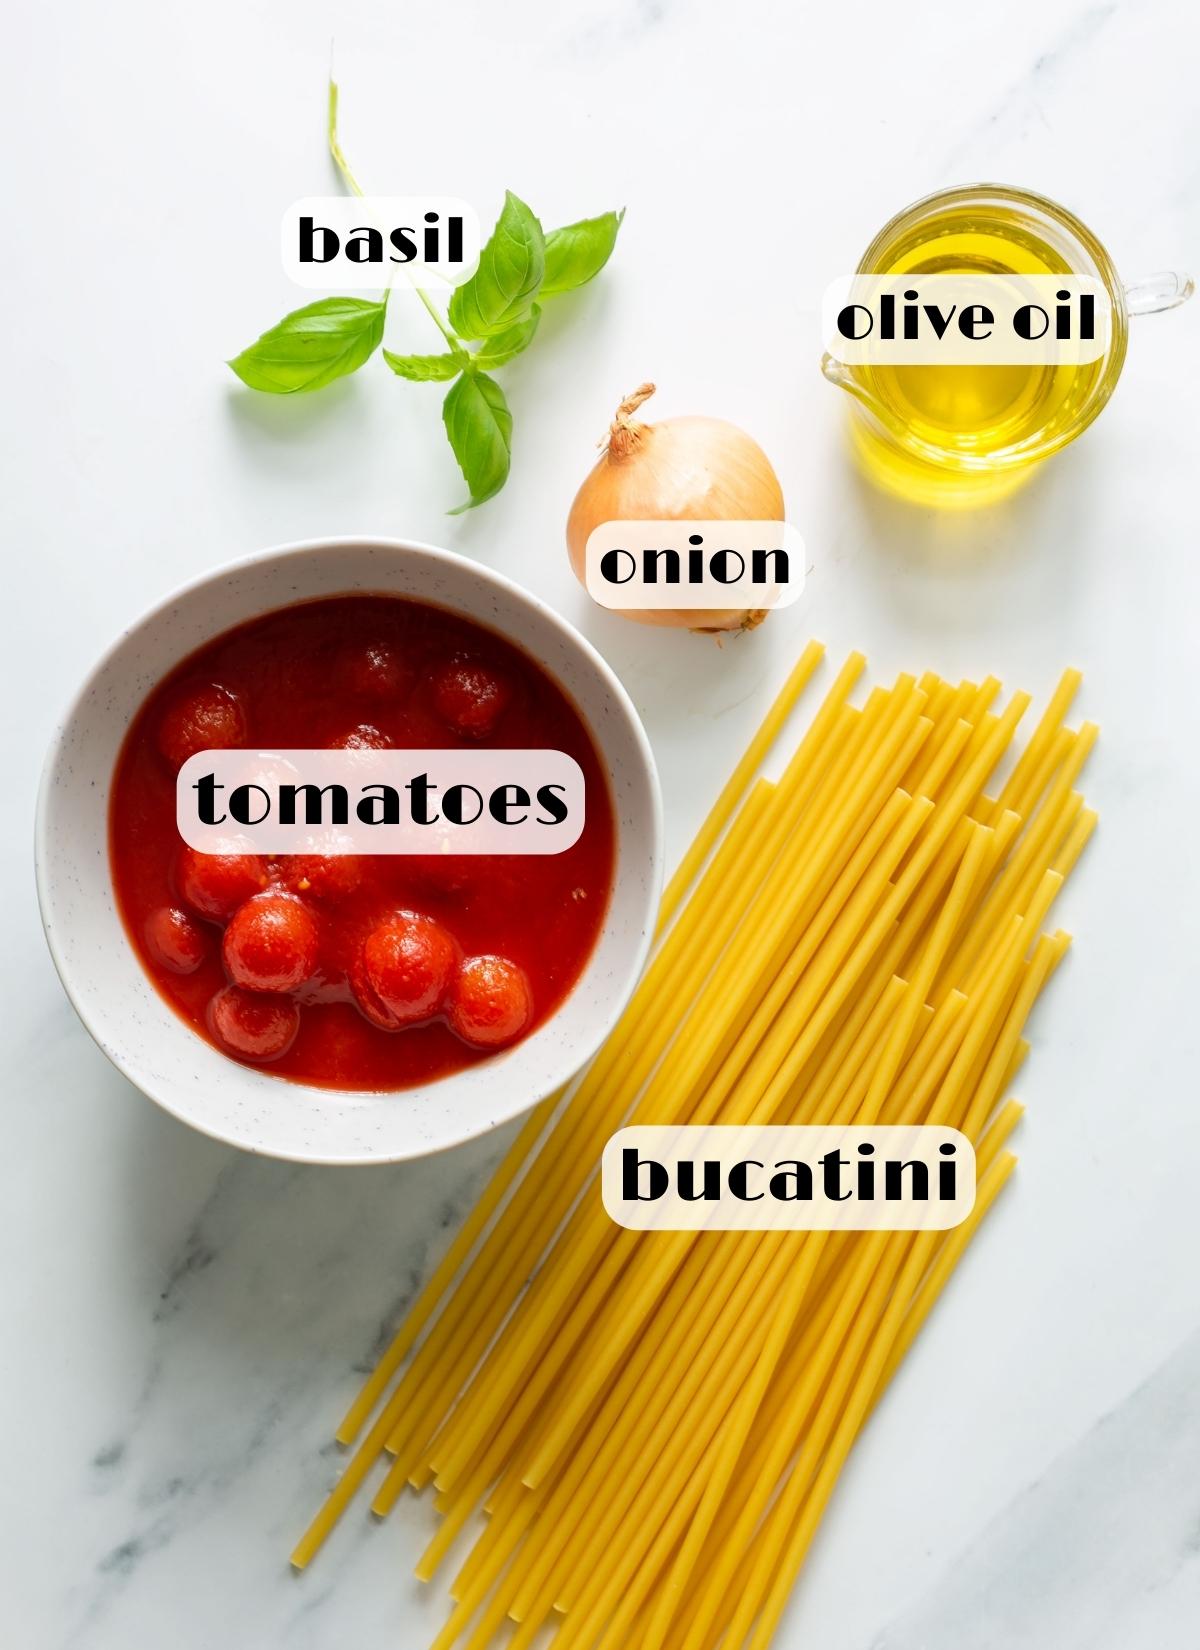 bucatini pomodoro ingredients: bucatini pasta, tomatoes, basil, onion, extra virgin olilve oil.